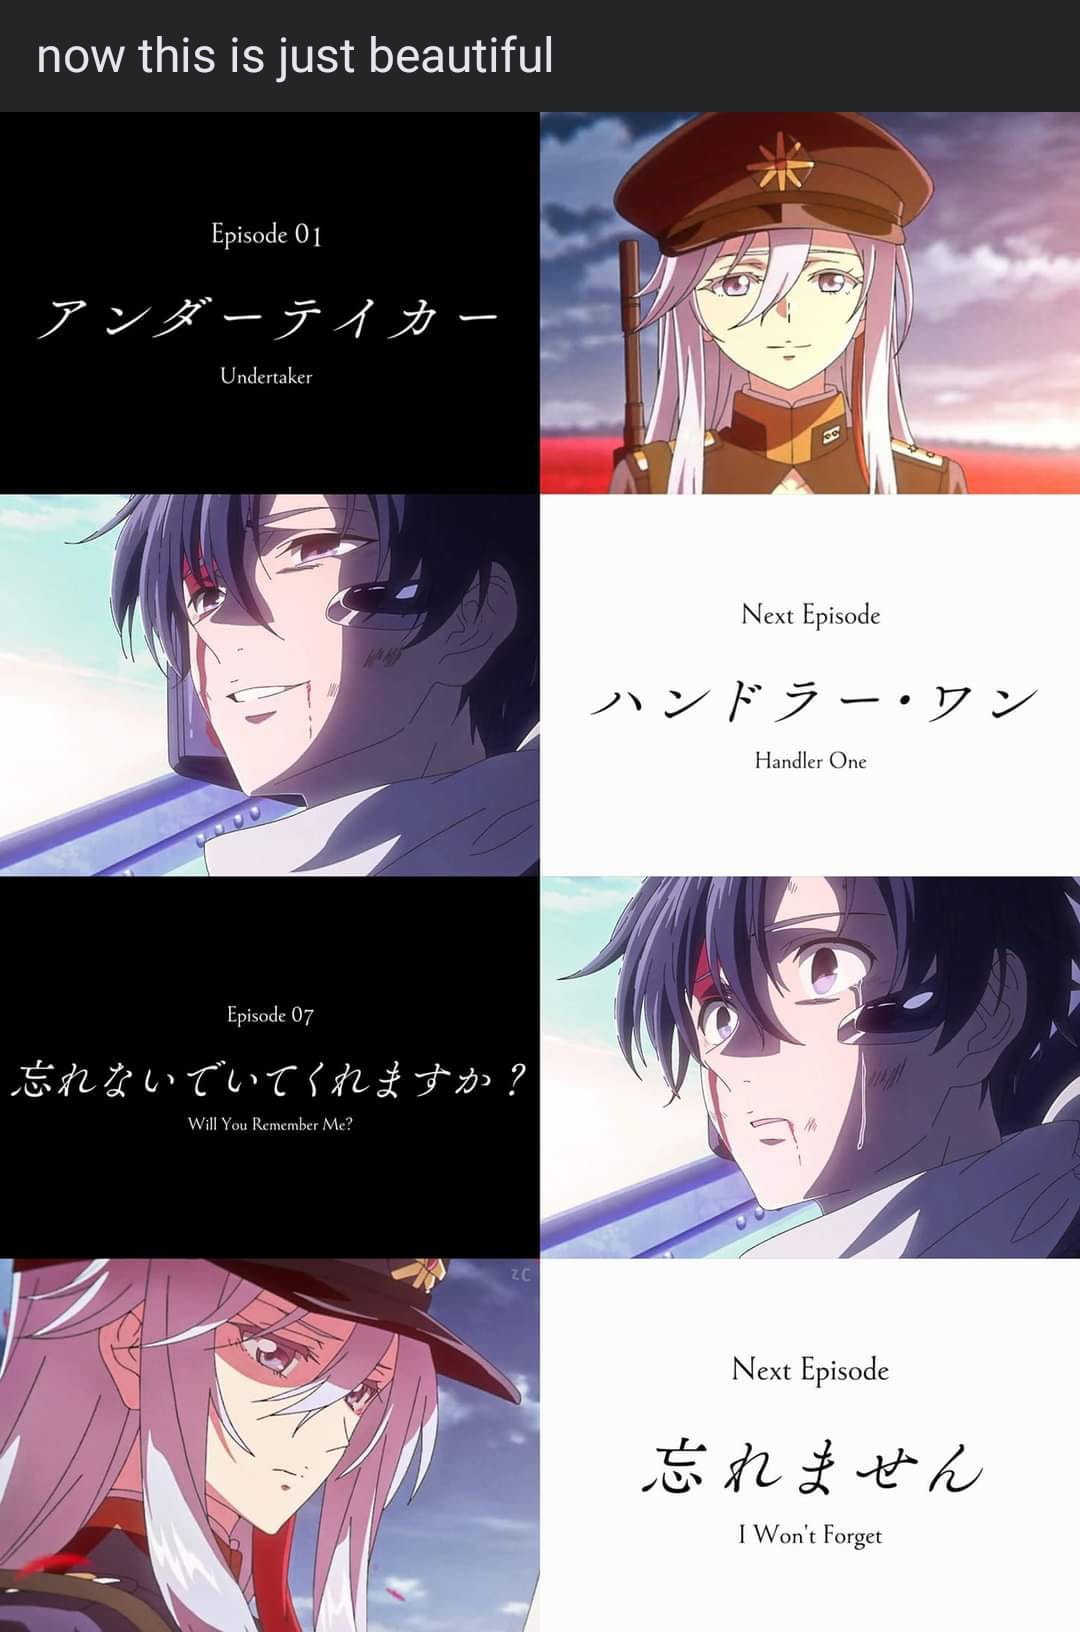 Hachi-nantte, Sore wa Nai Deshou! - Episode 12 discussion - FINAL : r/anime